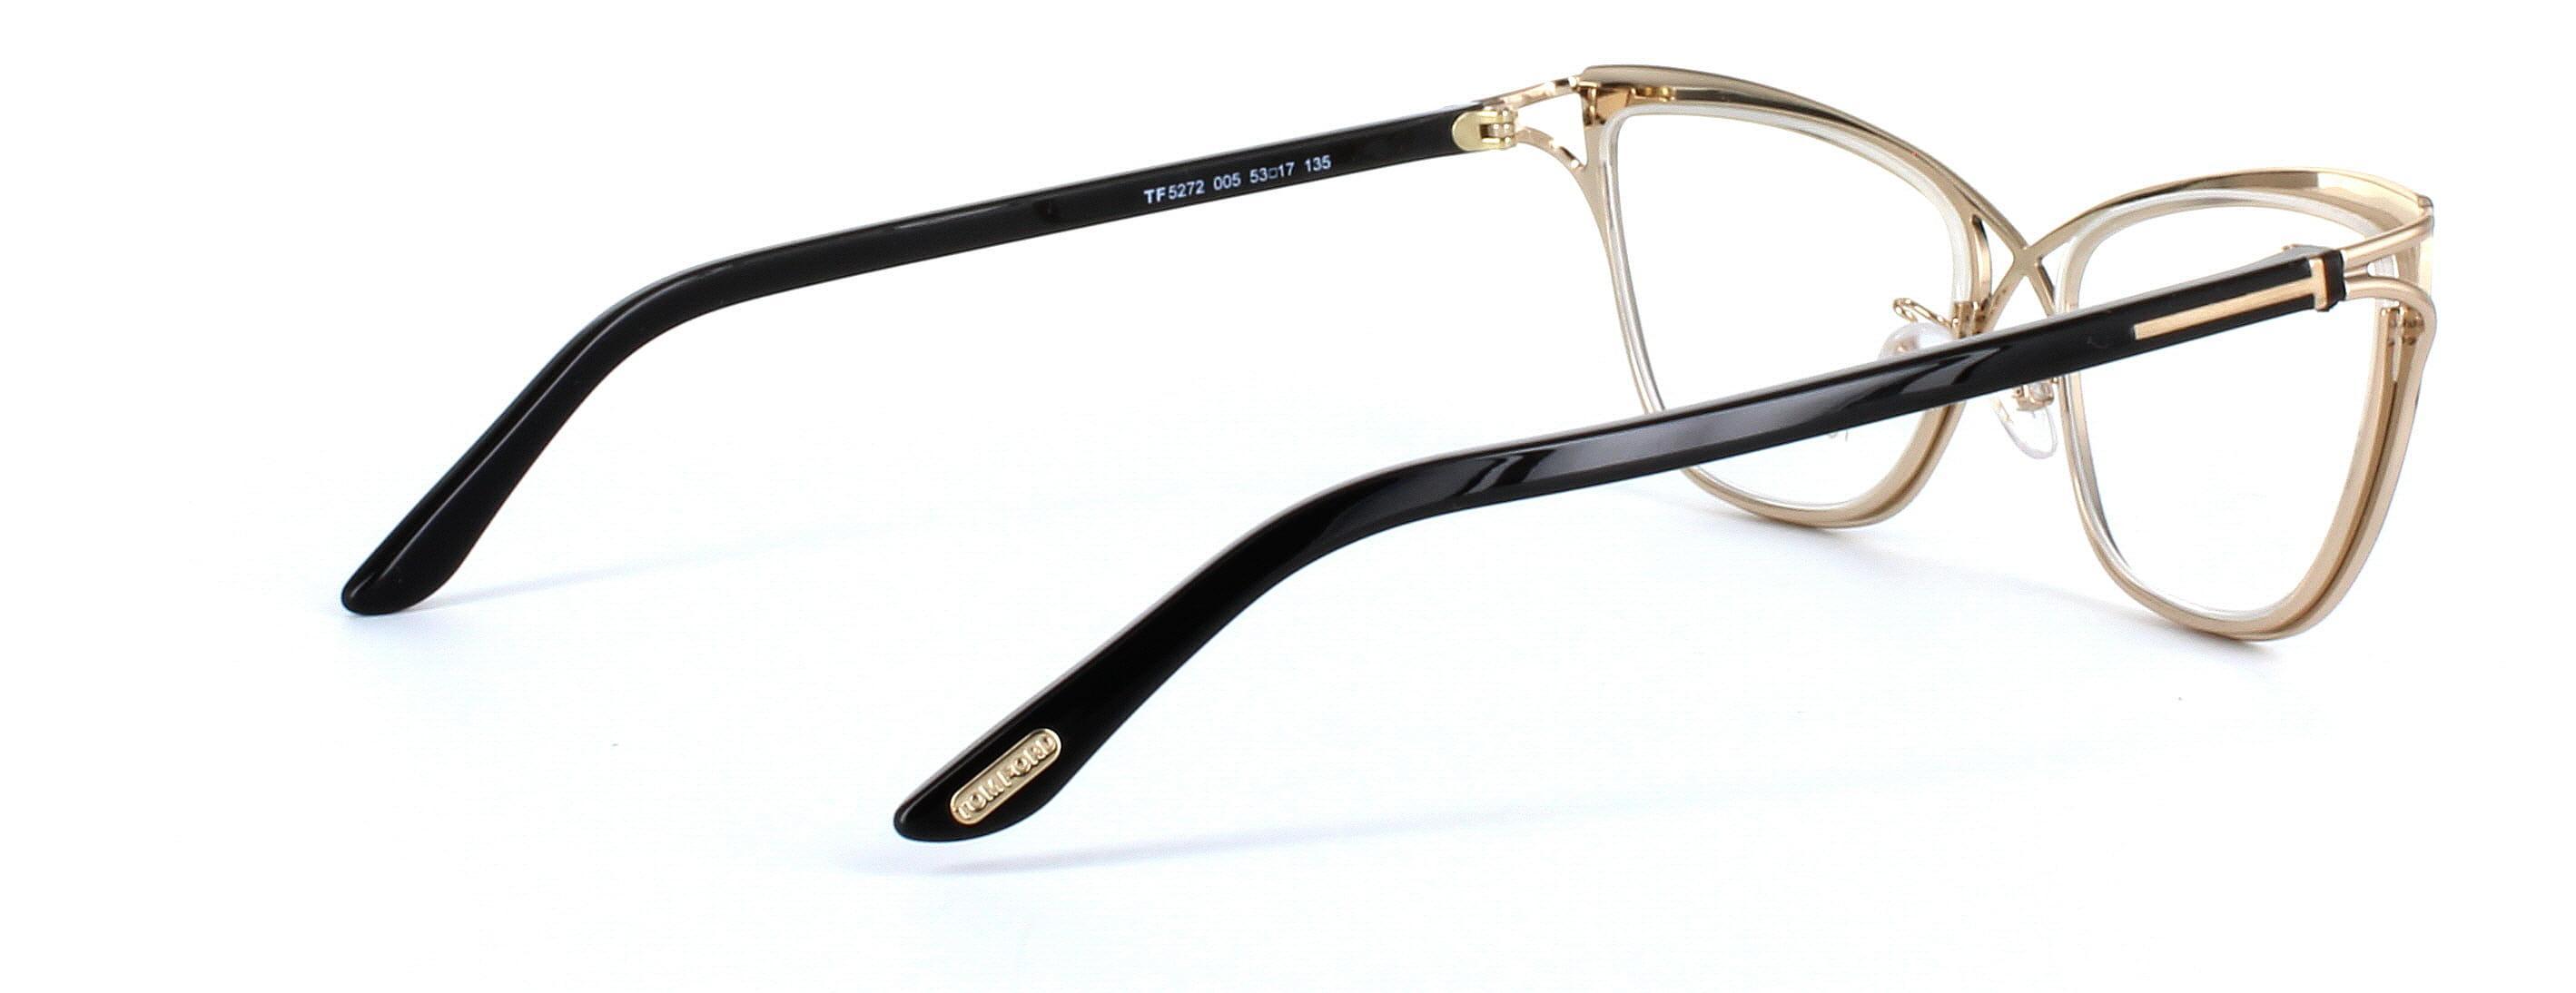 Ladies Tom Ford glasses - black & gold - image 4